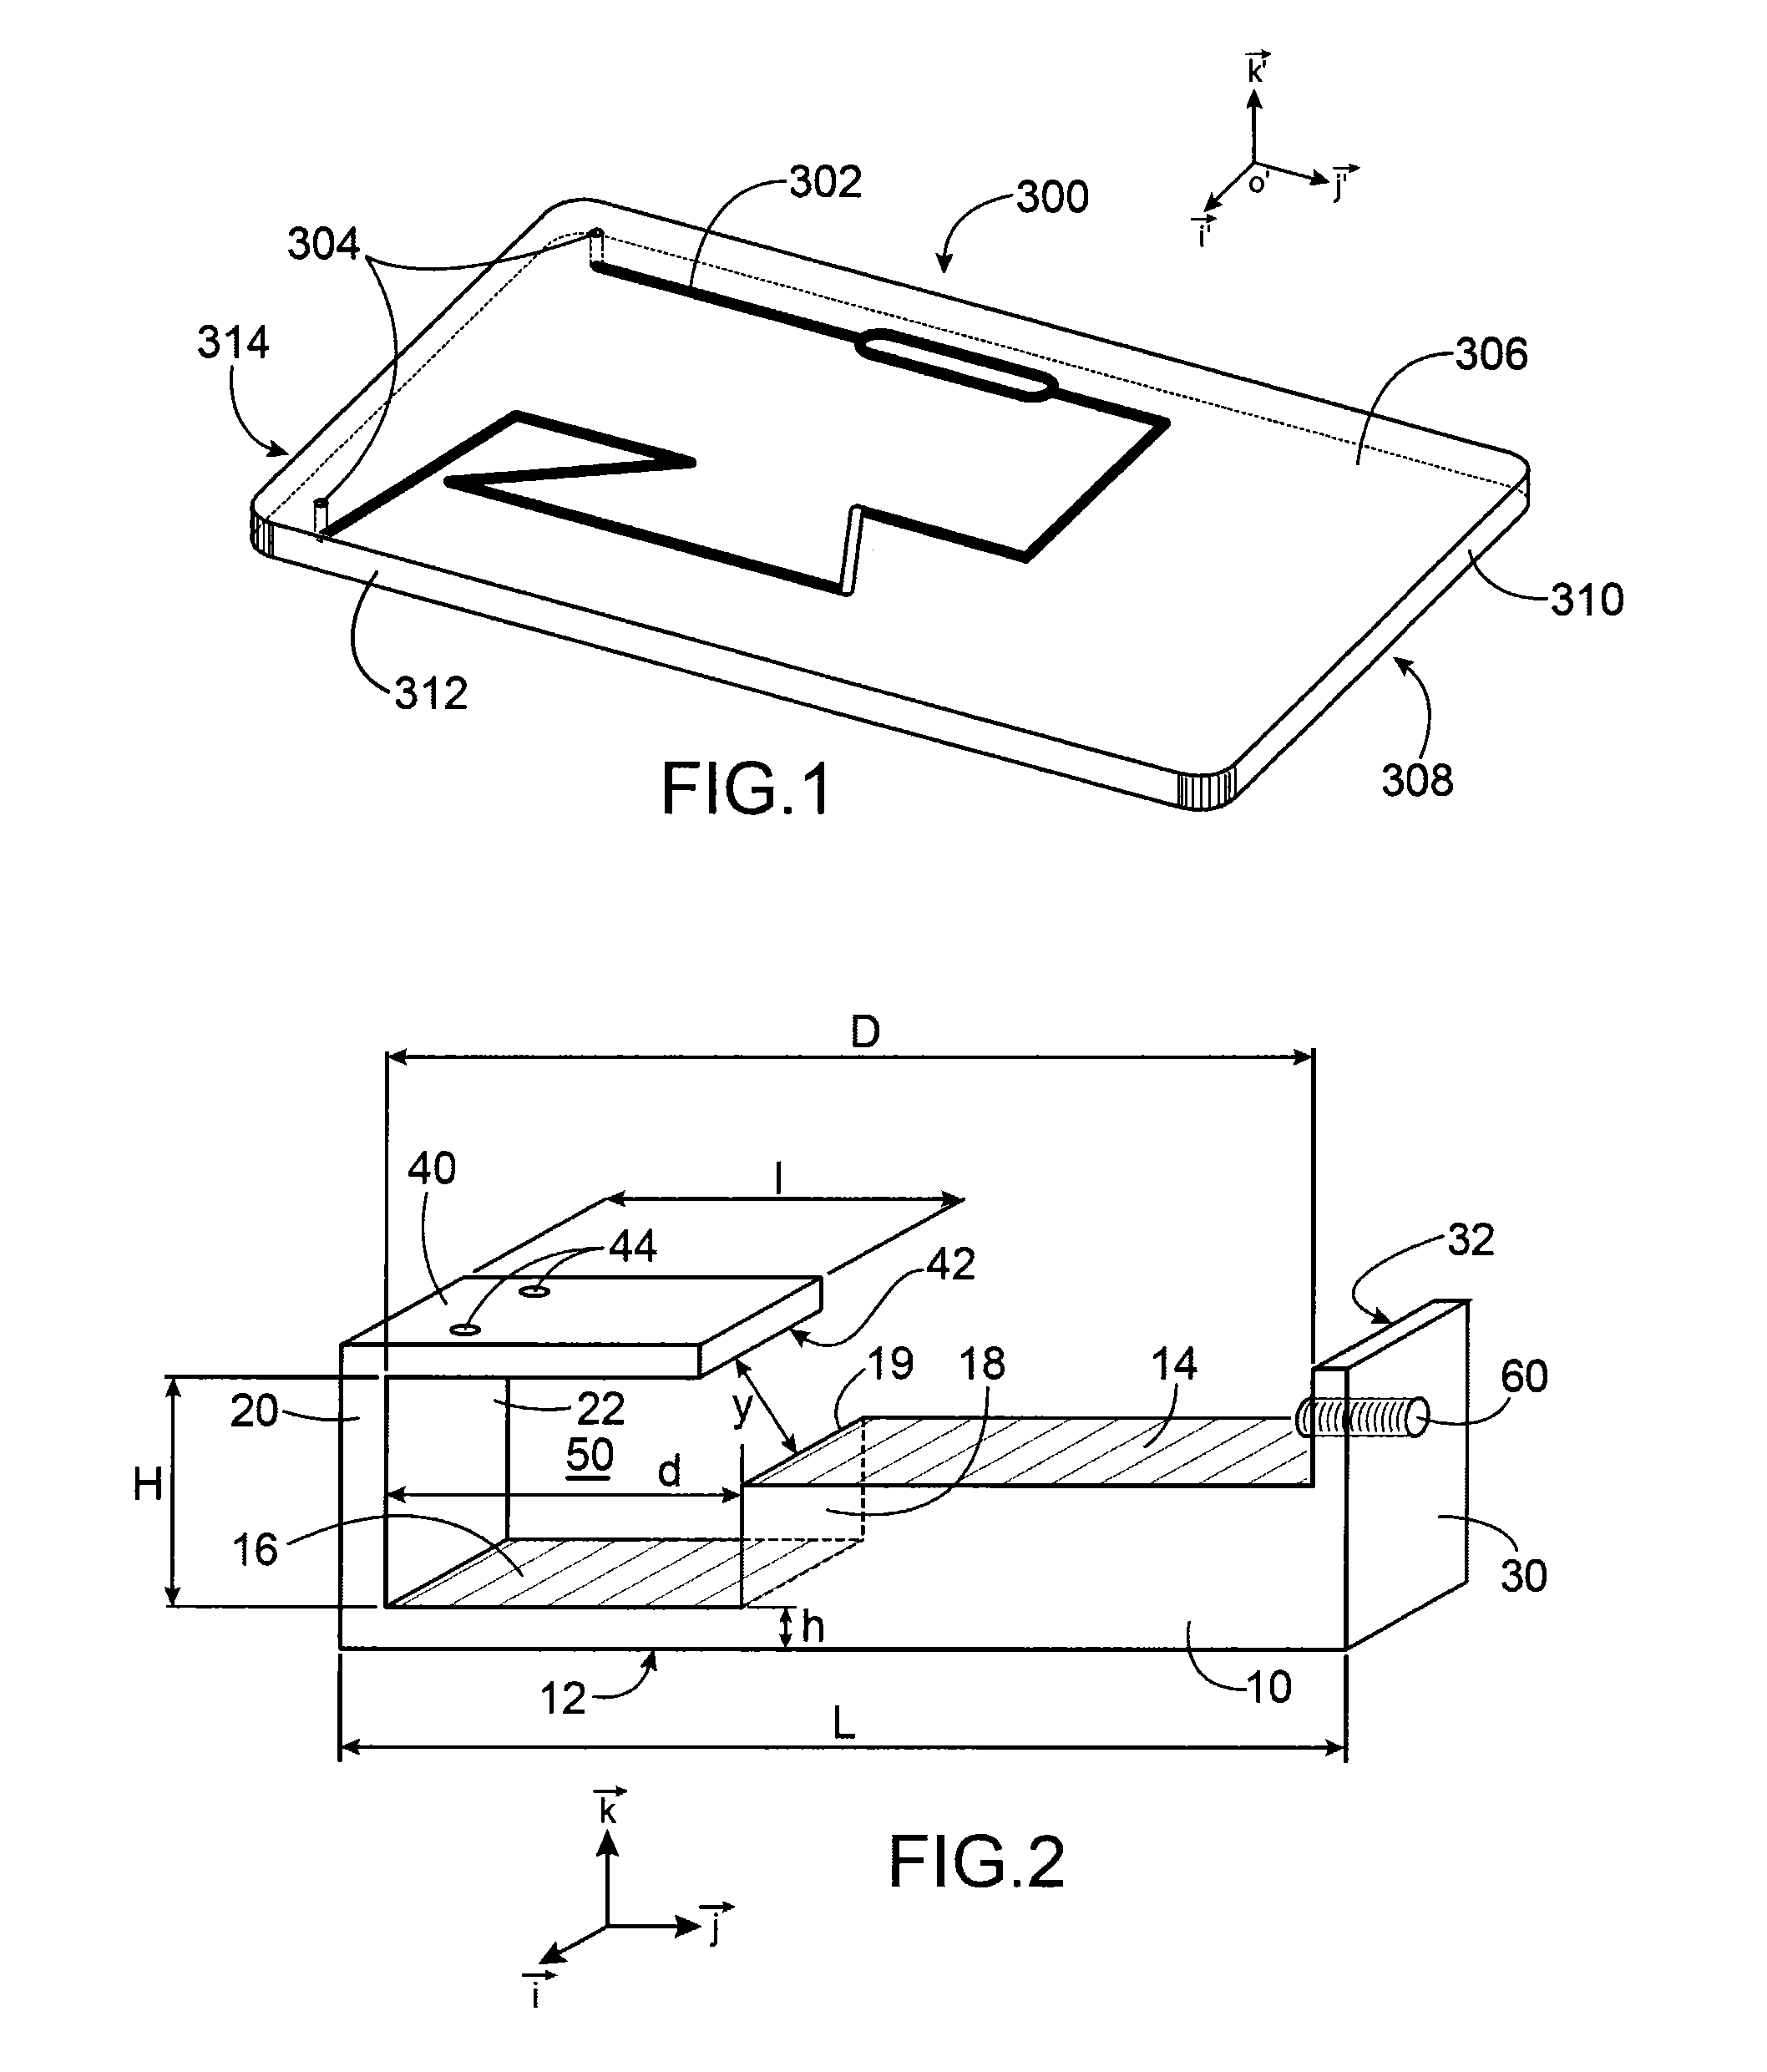 Microfluidic card connection device